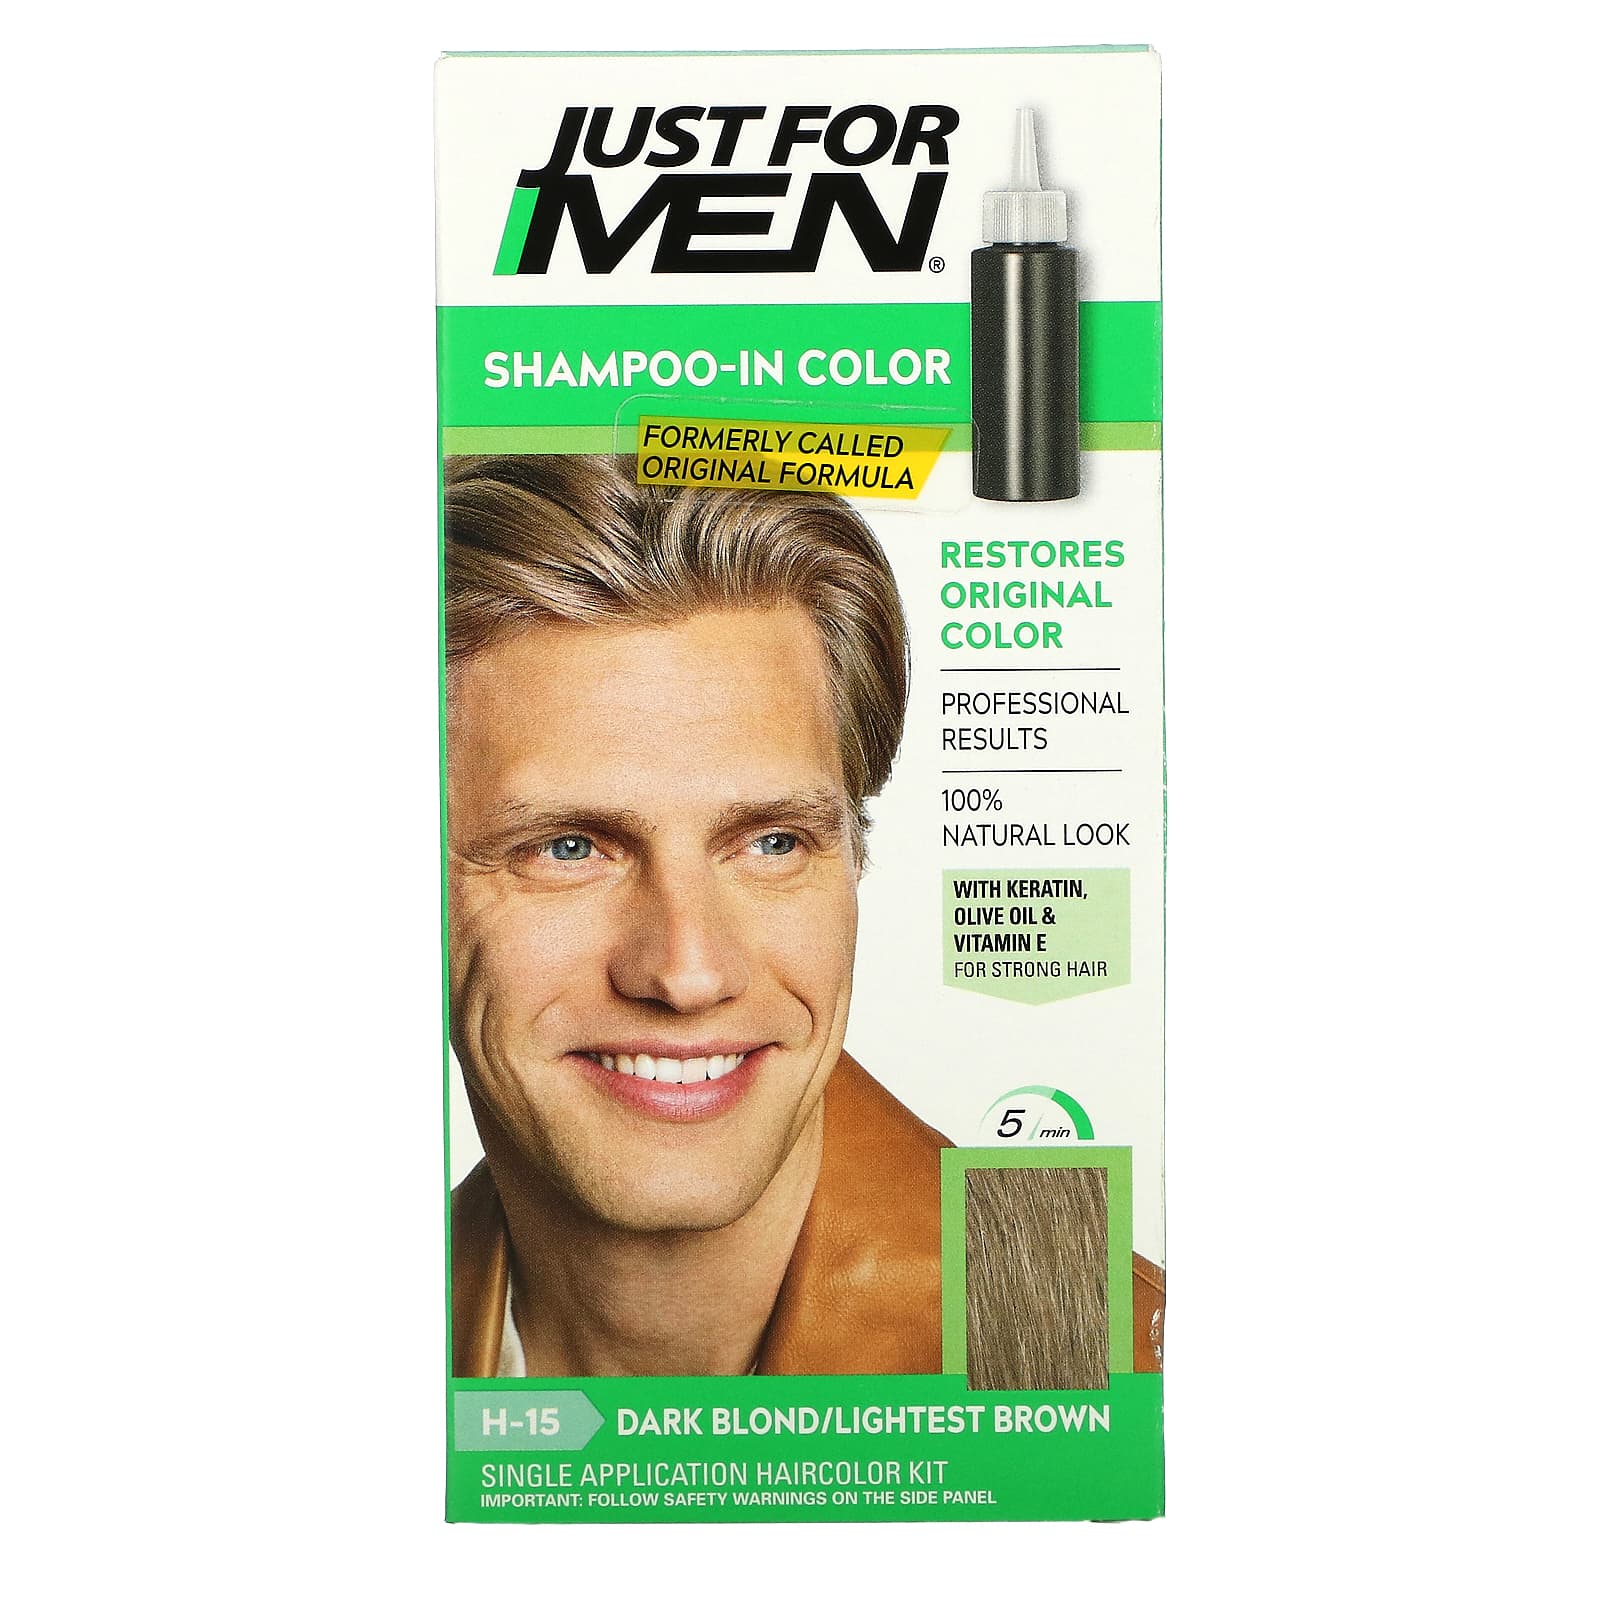 Just for Men, Shampoo-In Color, Men's Hair Color, Dark Blond/Lightest Brown  H-15, Single Application Haircolor Kit